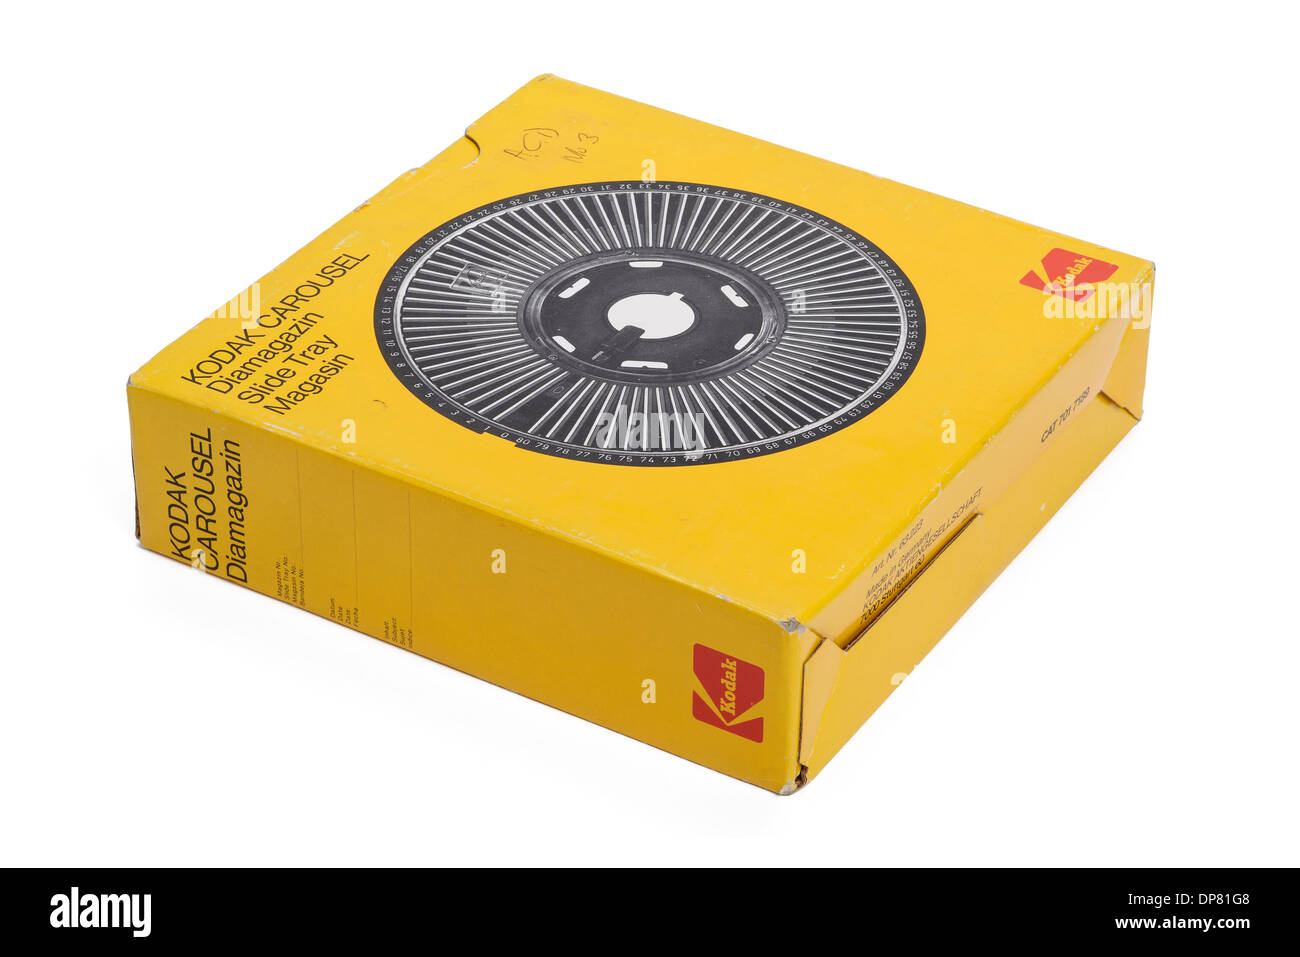 Kodak-Karussell kreisförmige Folie Fach Box für ein Dia-Projektor Stockfoto